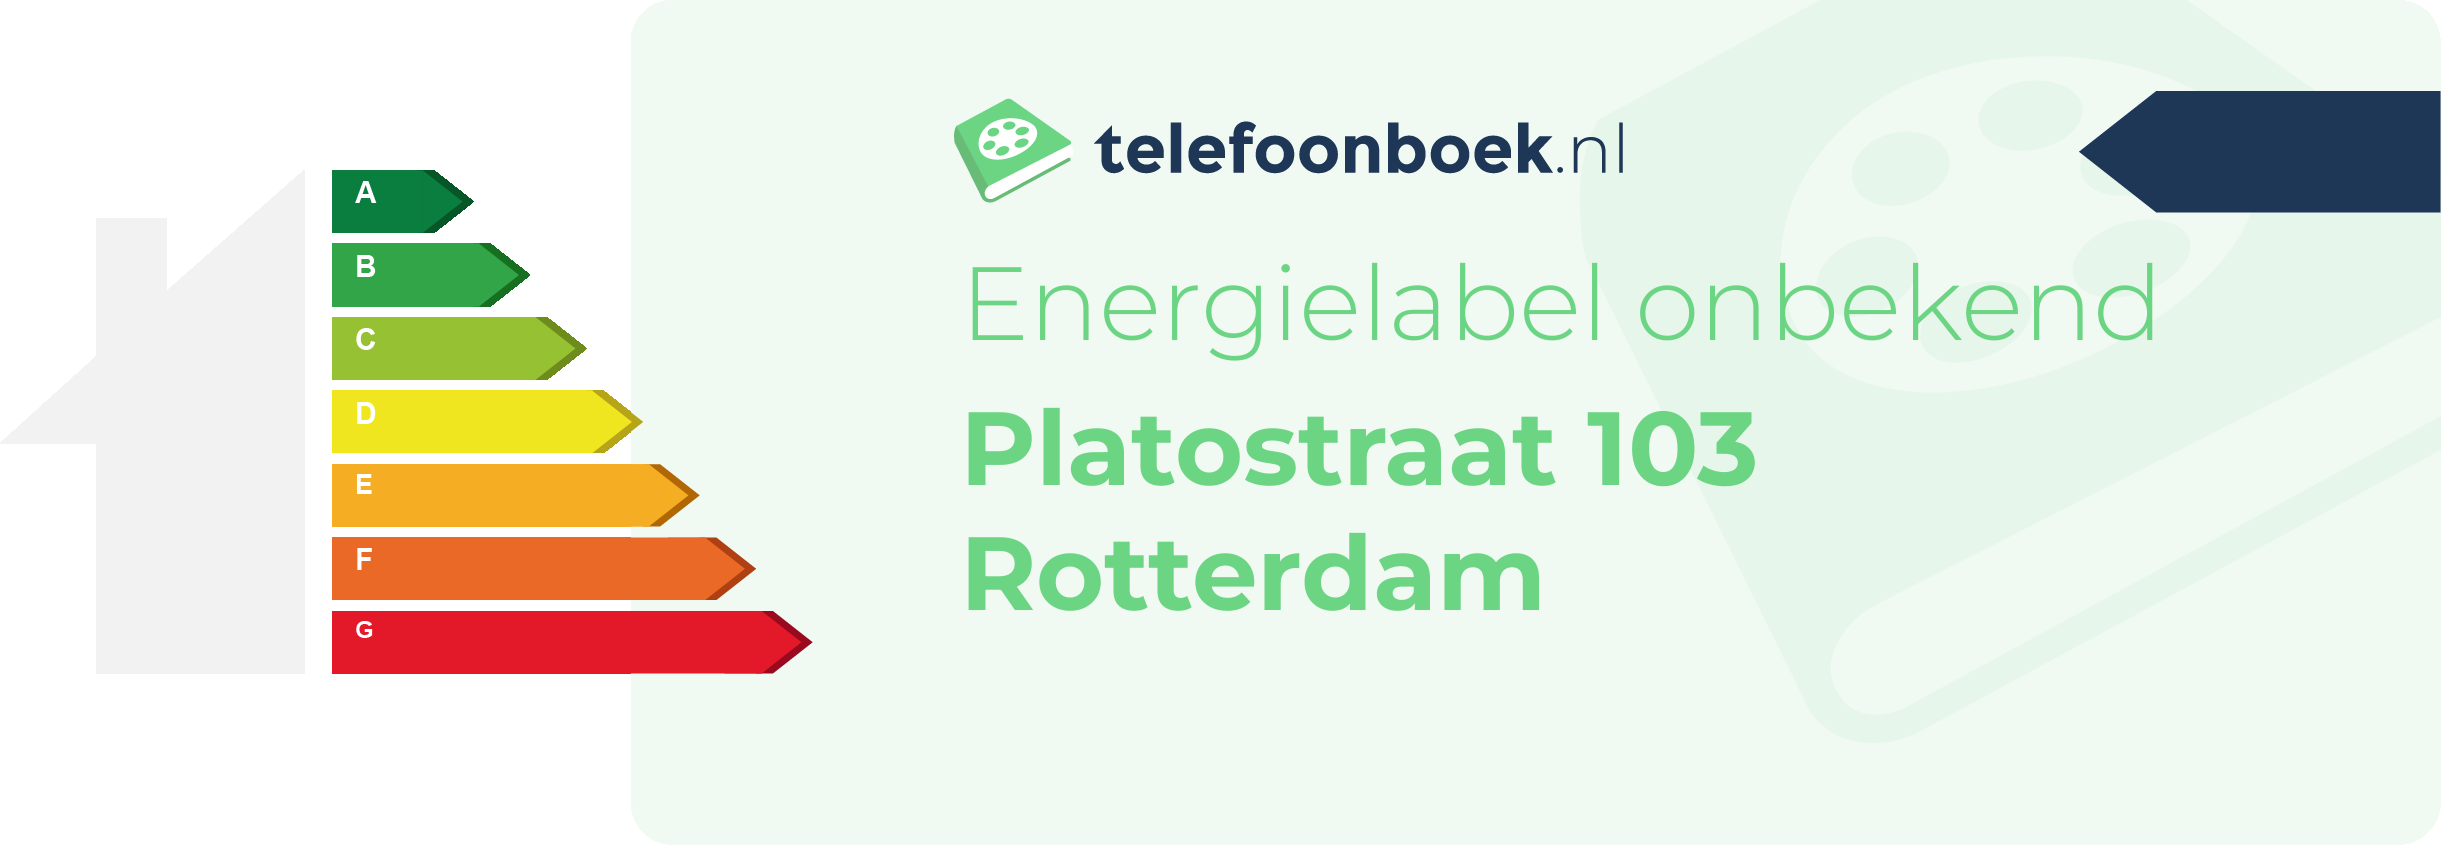 Energielabel Platostraat 103 Rotterdam